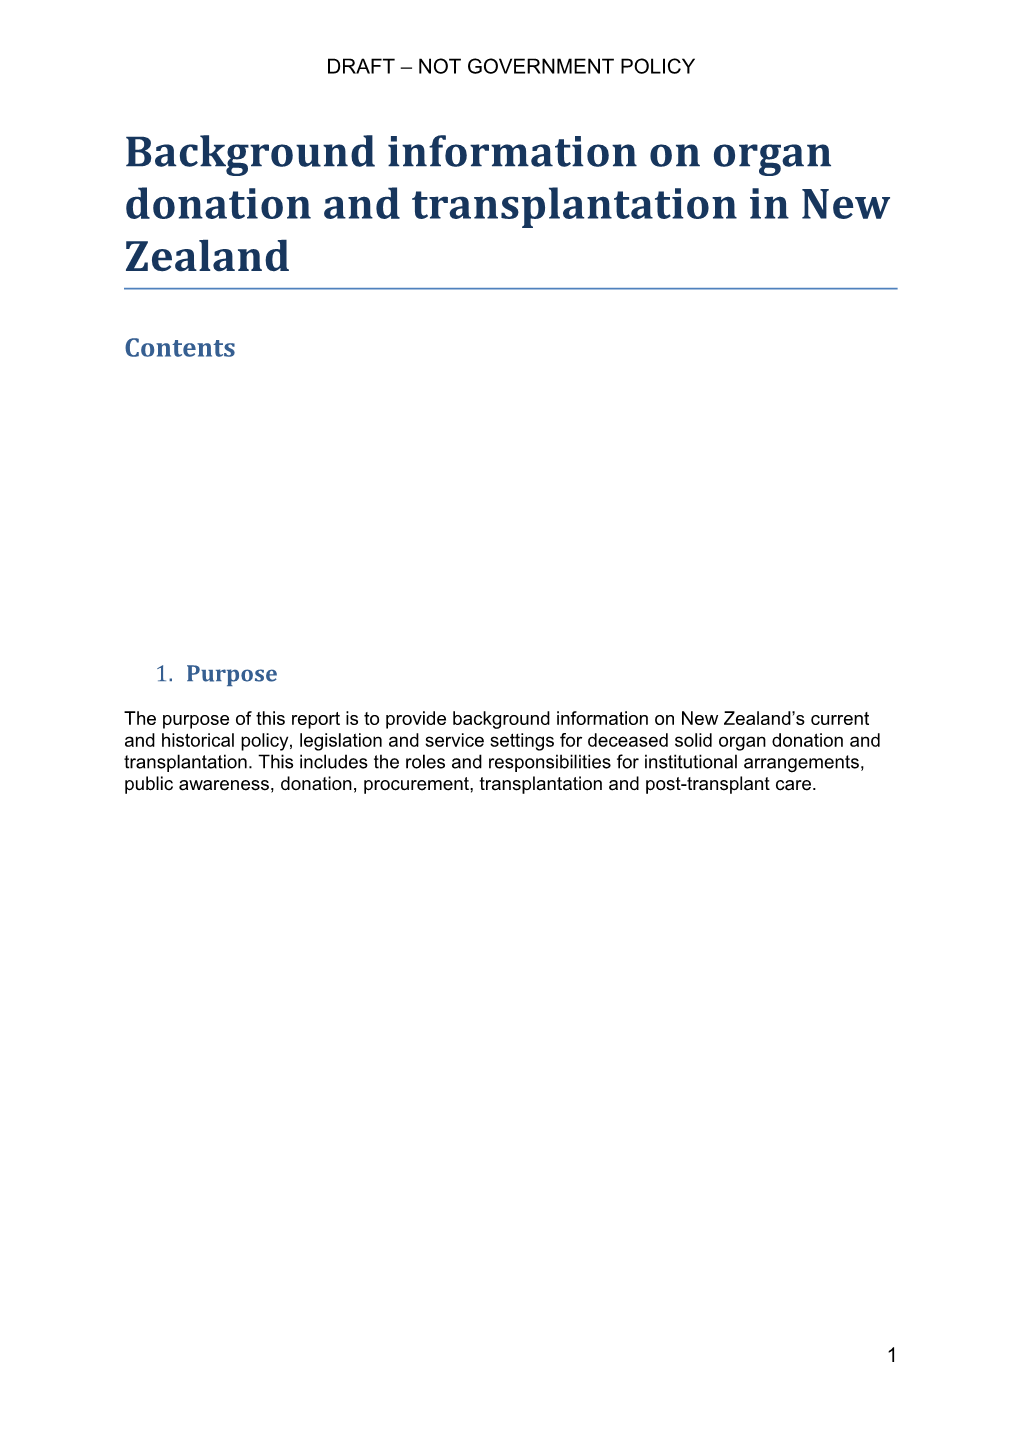 Background Informationon Organ Donation and Transplantation in New Zealand